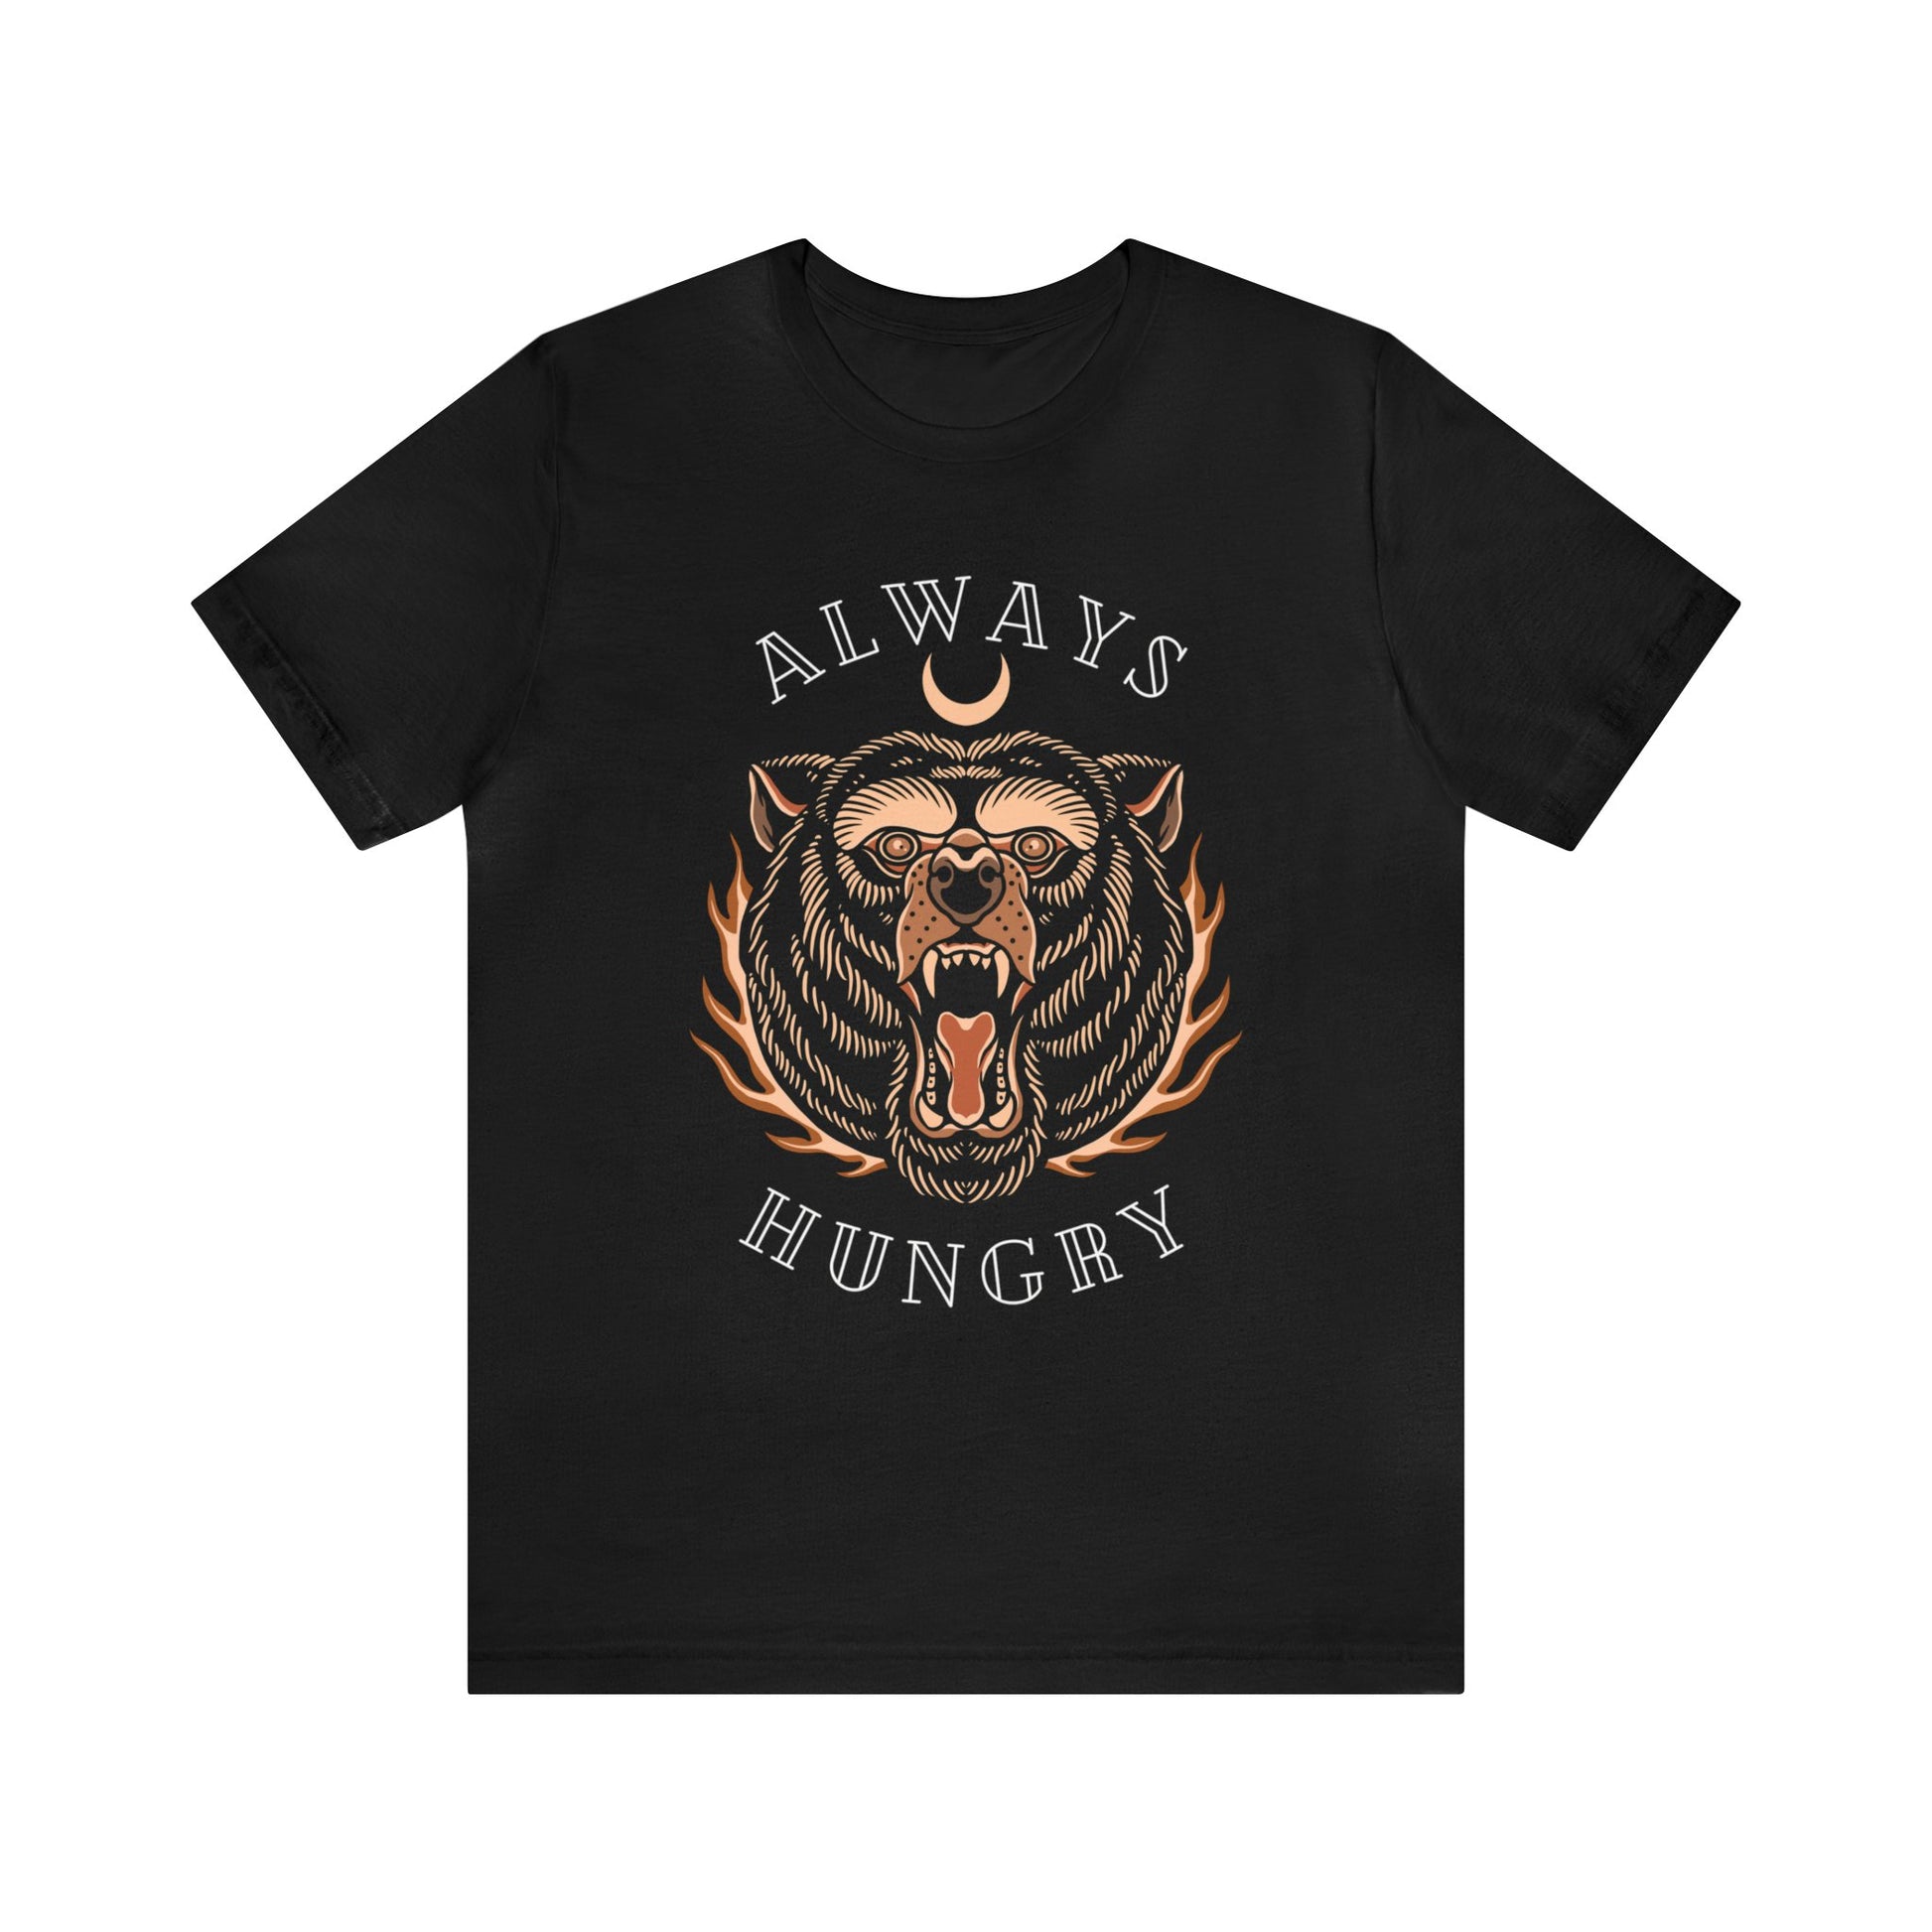 Always Hungry Bear Tattoo T-shirt / Traditional Tattoo Tee Shirt / Punk Rock Clothing Tshirt Rockabilly Psychobilly Freak Goth - Foxlark Crystal Jewelry